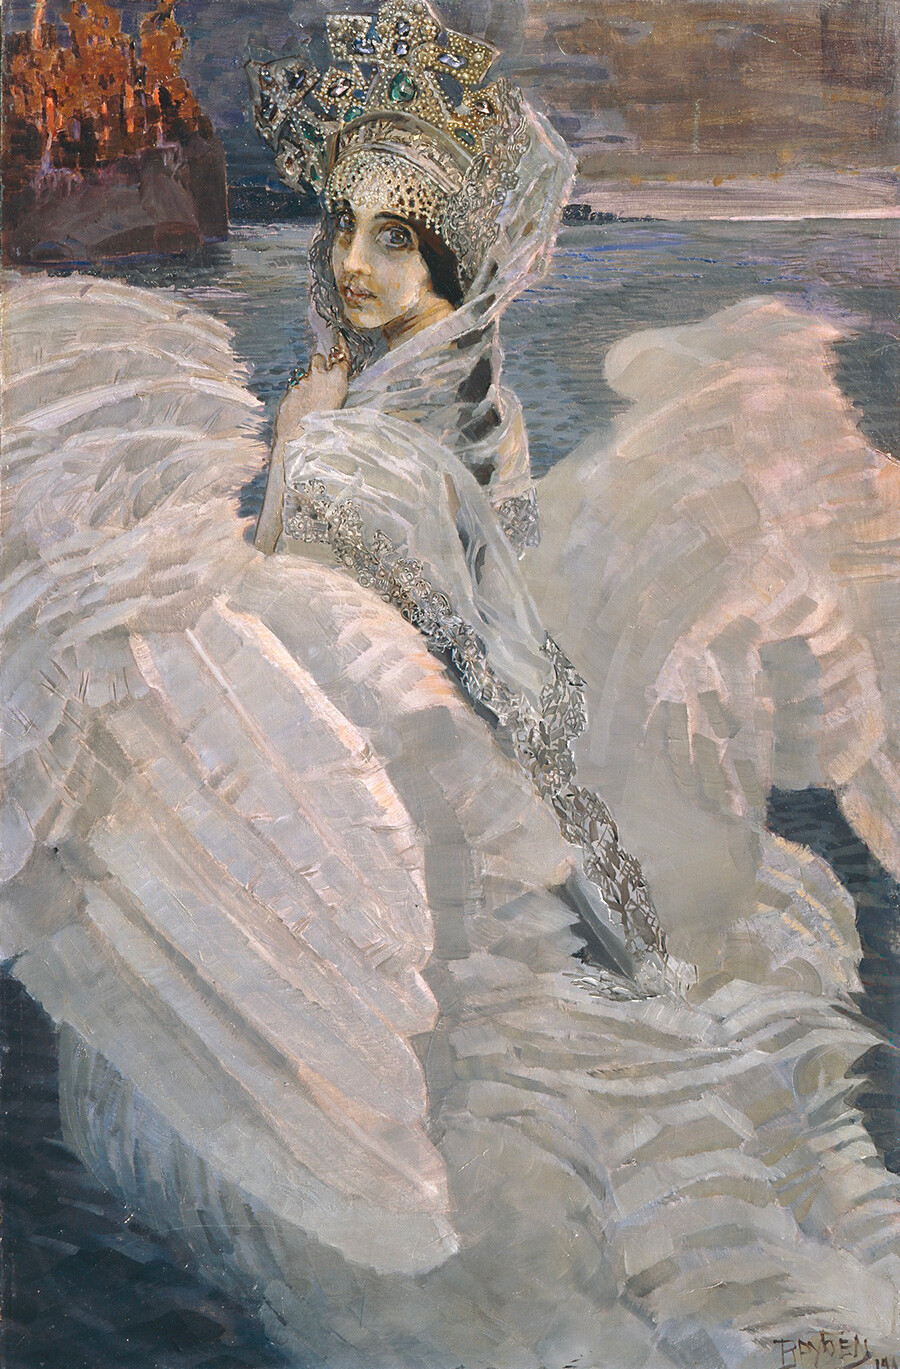 Mikhail Vrubel. The Swan Princess, 1900